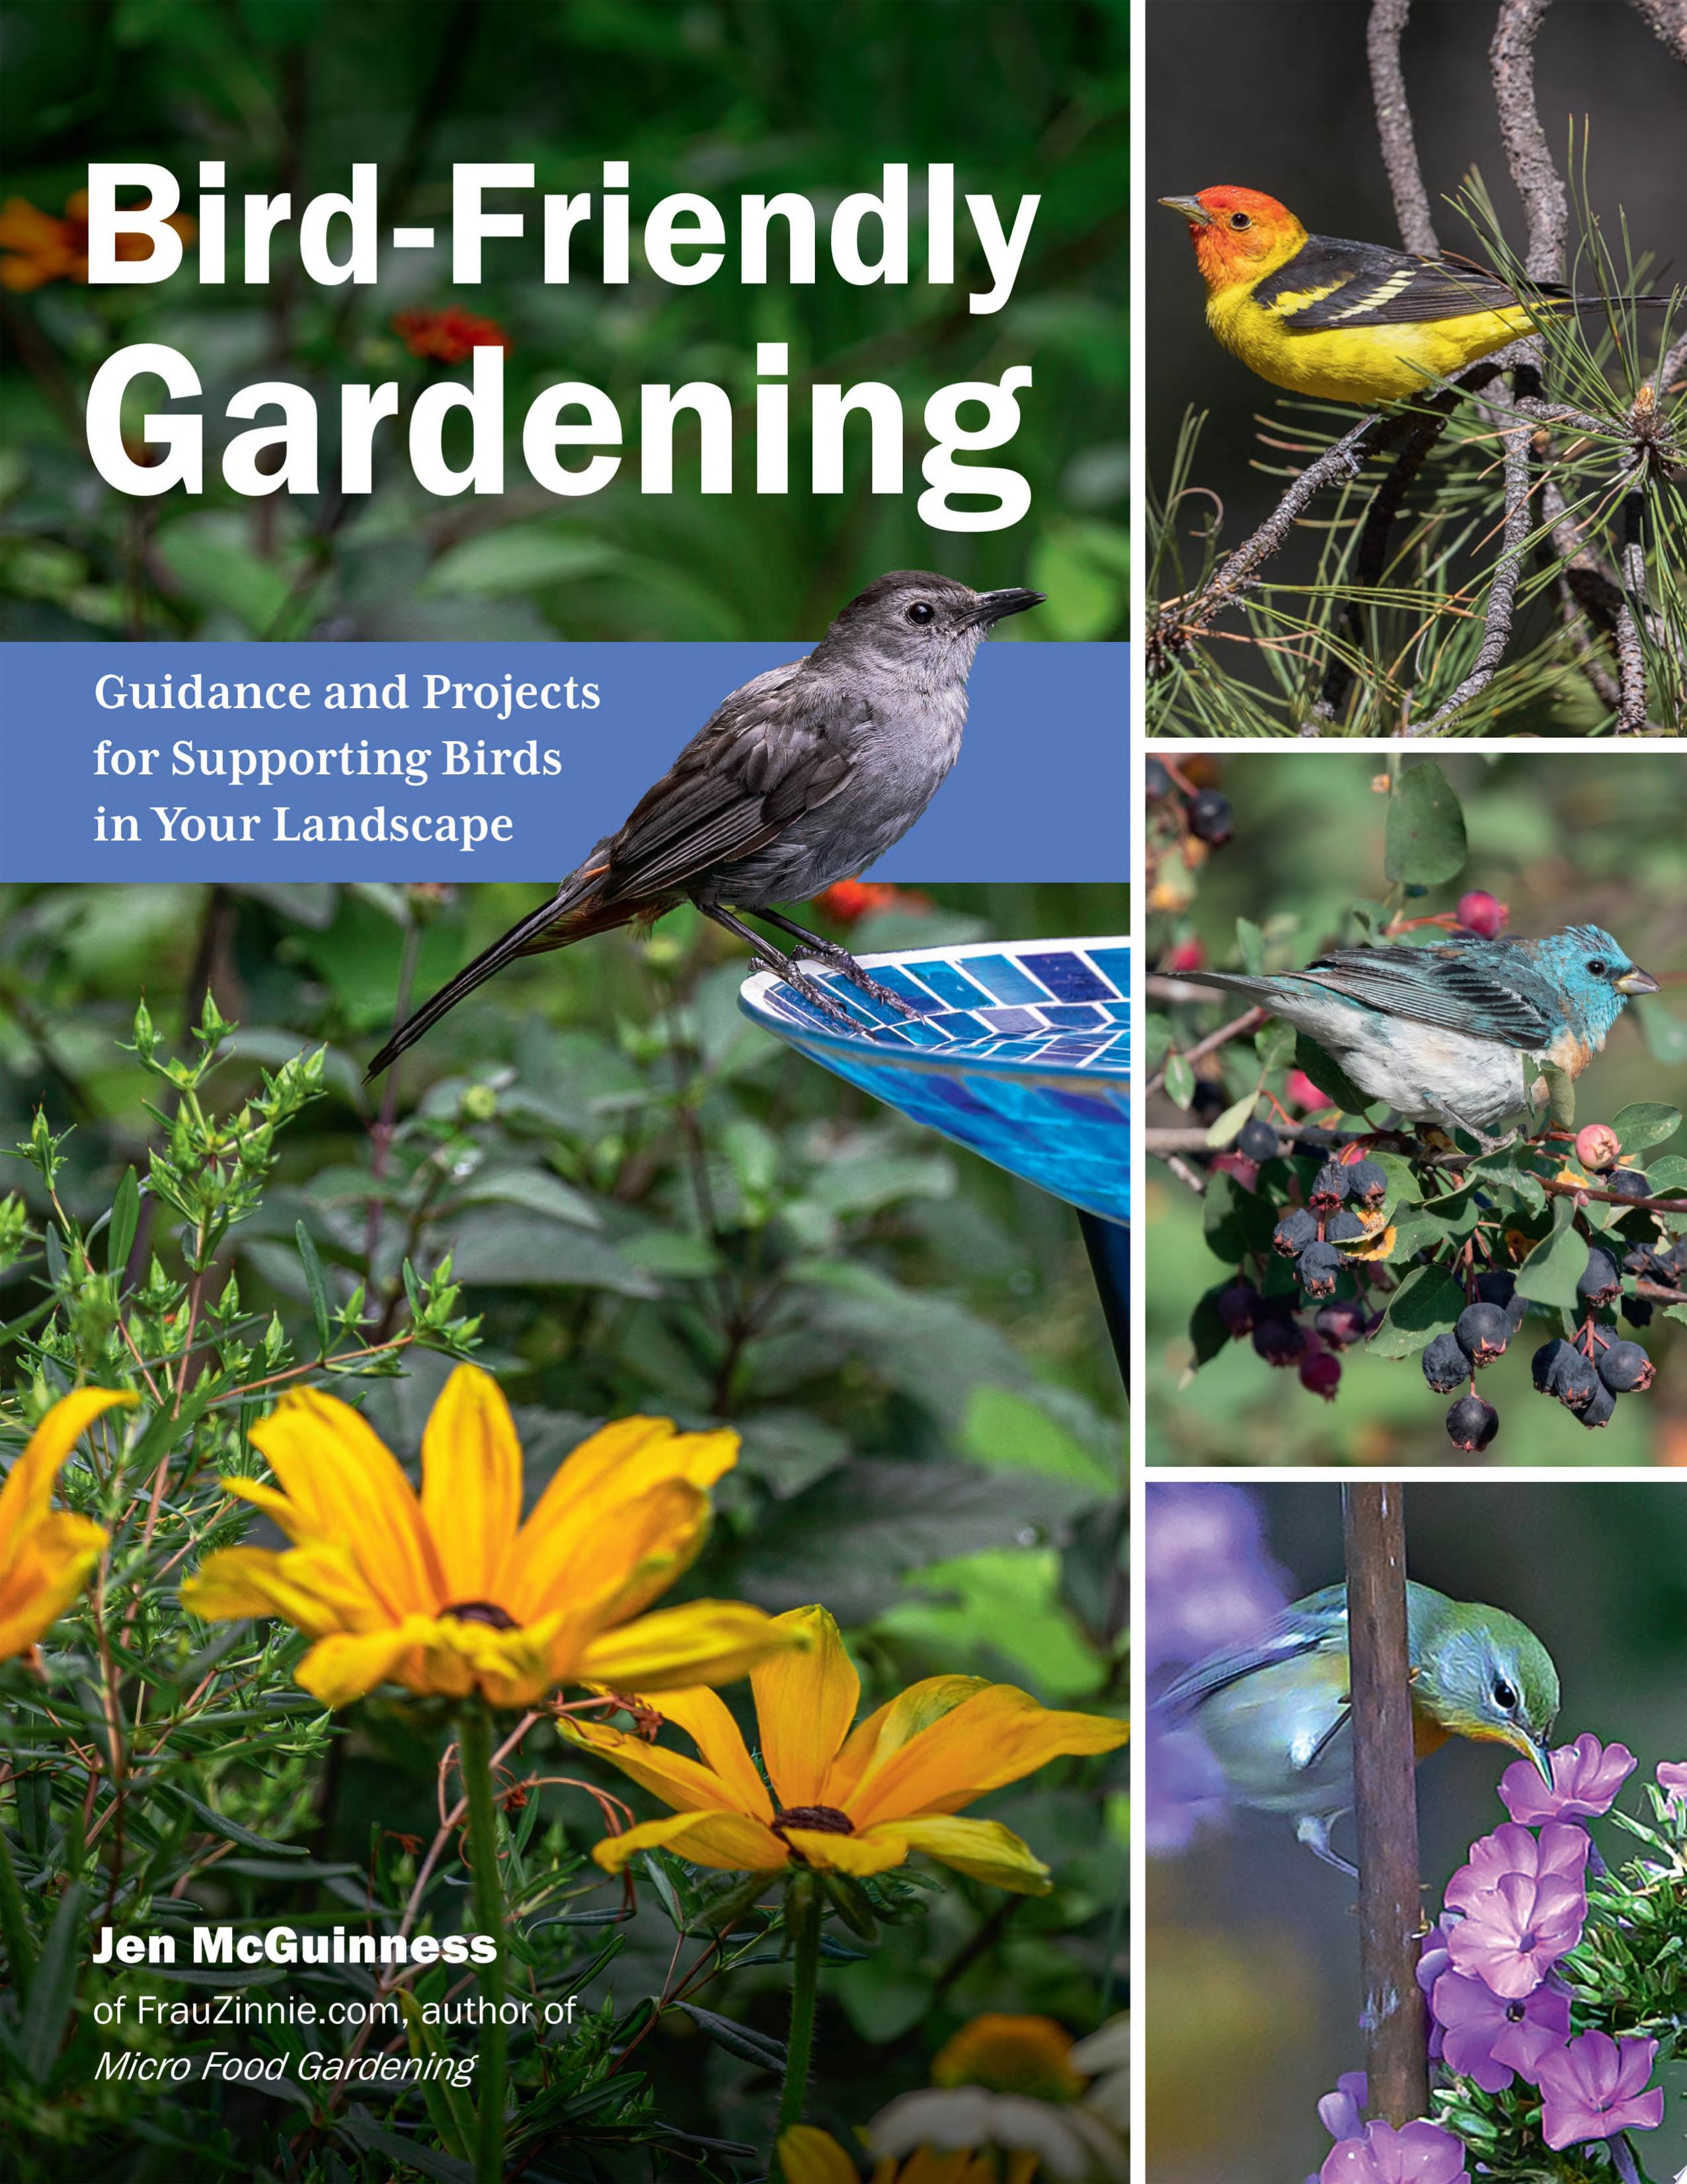 Image for "Bird-Friendly Gardening"